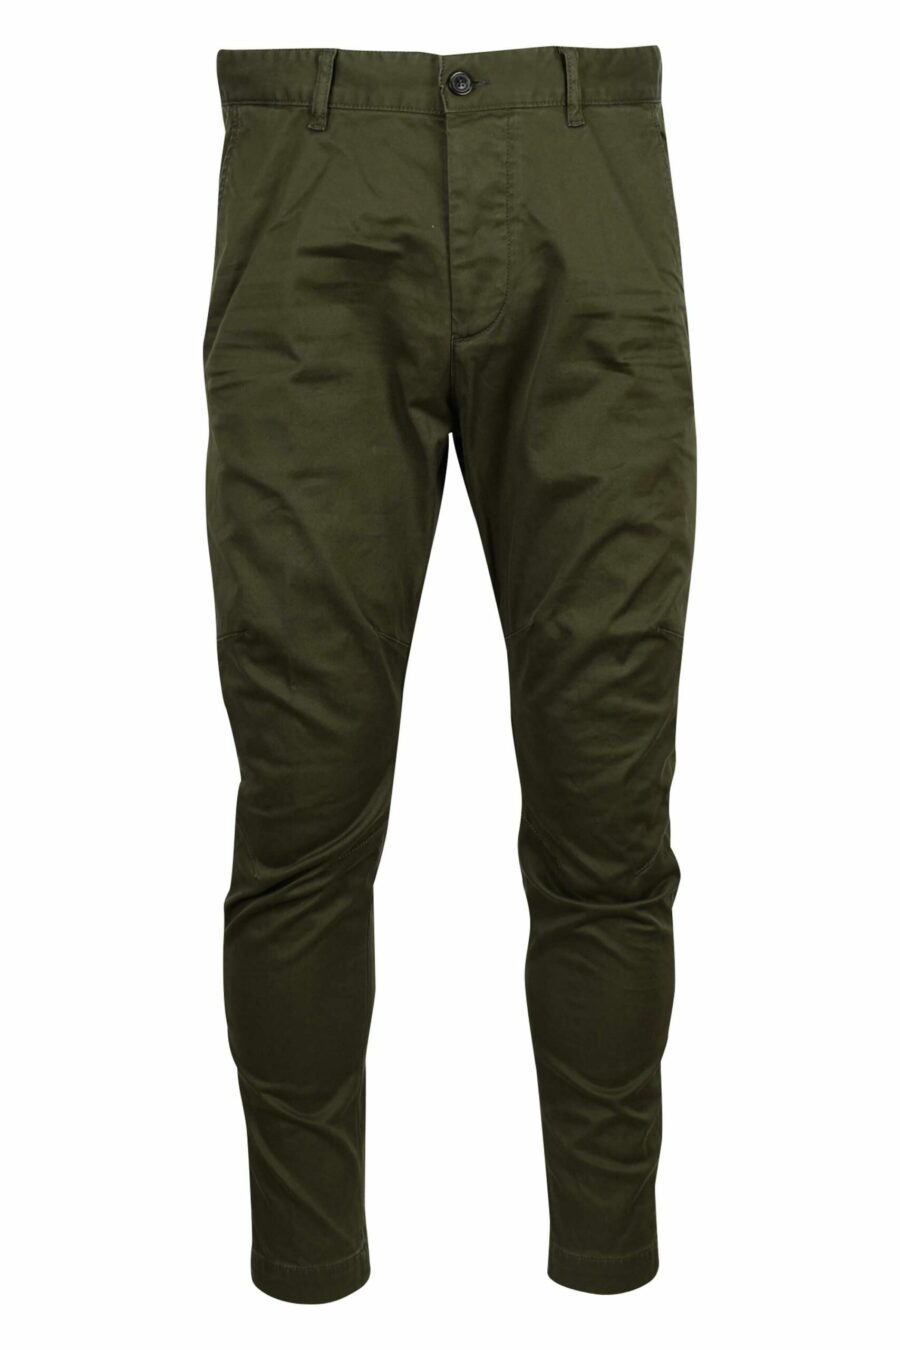 Pantalon vert militaire "sexy chino" - 8054148321741 échelonné